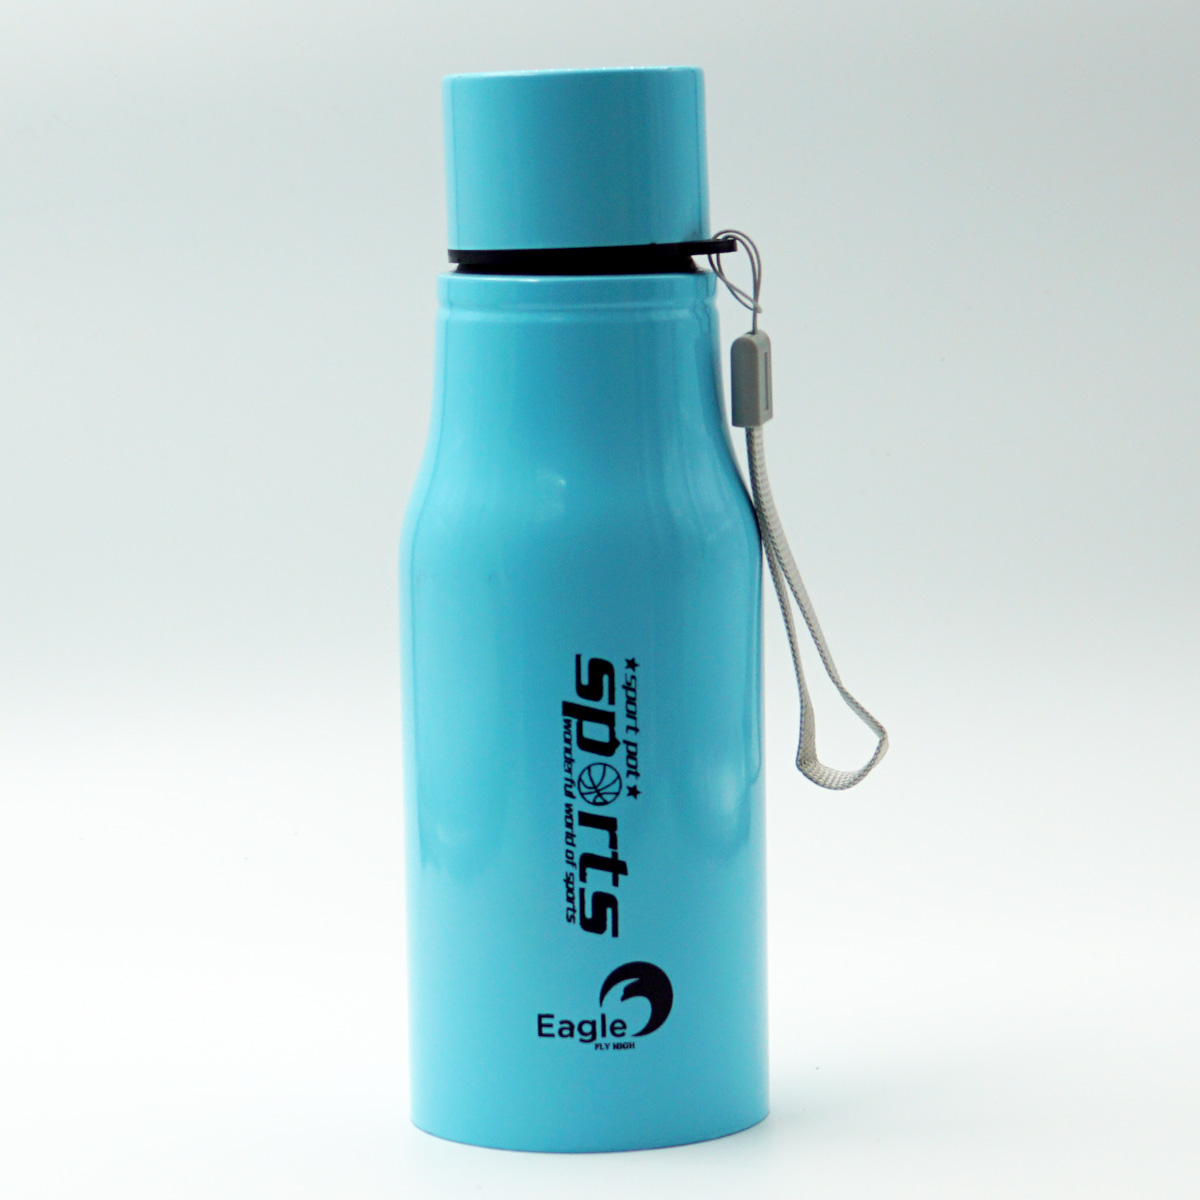 Eagle Stainless Steel Sky Blue Color 500ml Sport Water Bottle SKU 96576